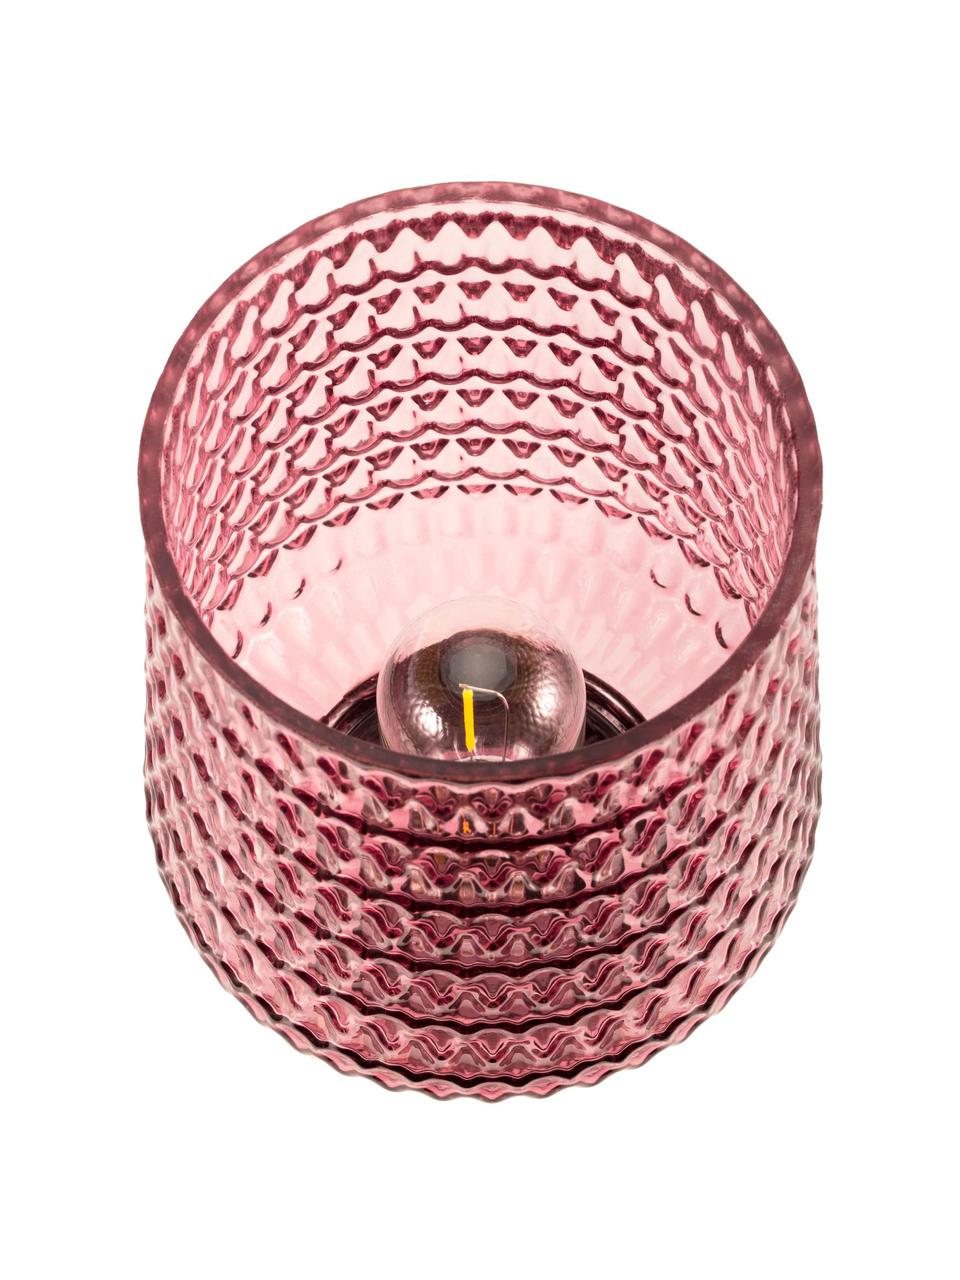 Kleine Mobile LED-Tischlampe Rose Glamour mit Timerfunktion, Glas, Metall, Rosa, Goldfarben, Ø 16 x H 21 cm